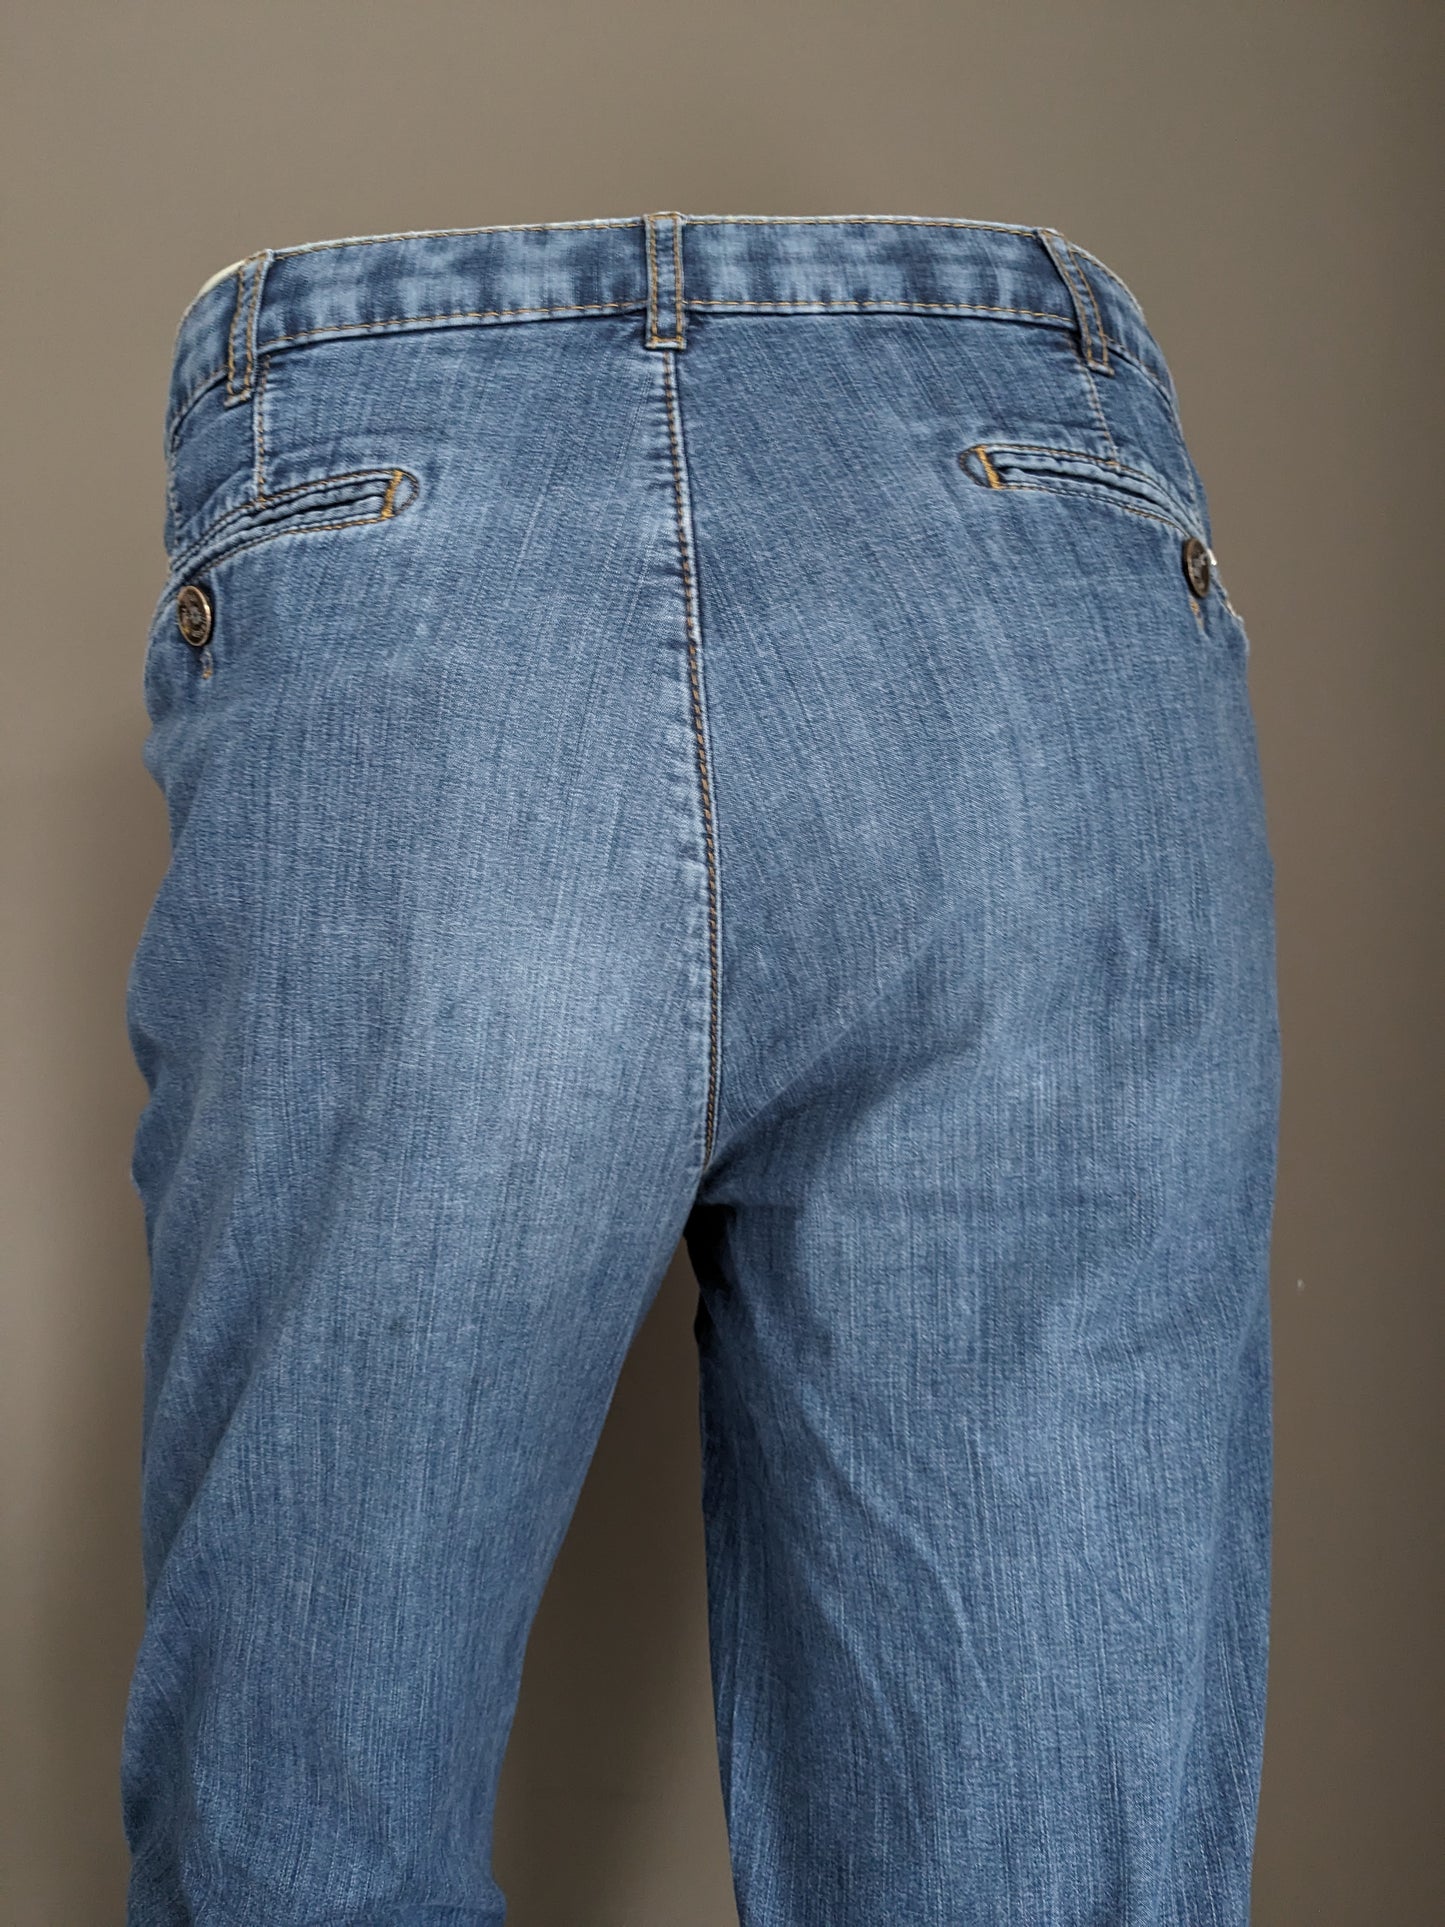 Meyer pants. Thin denim. Baw colored. Size 50 / M. Type "Dubai".